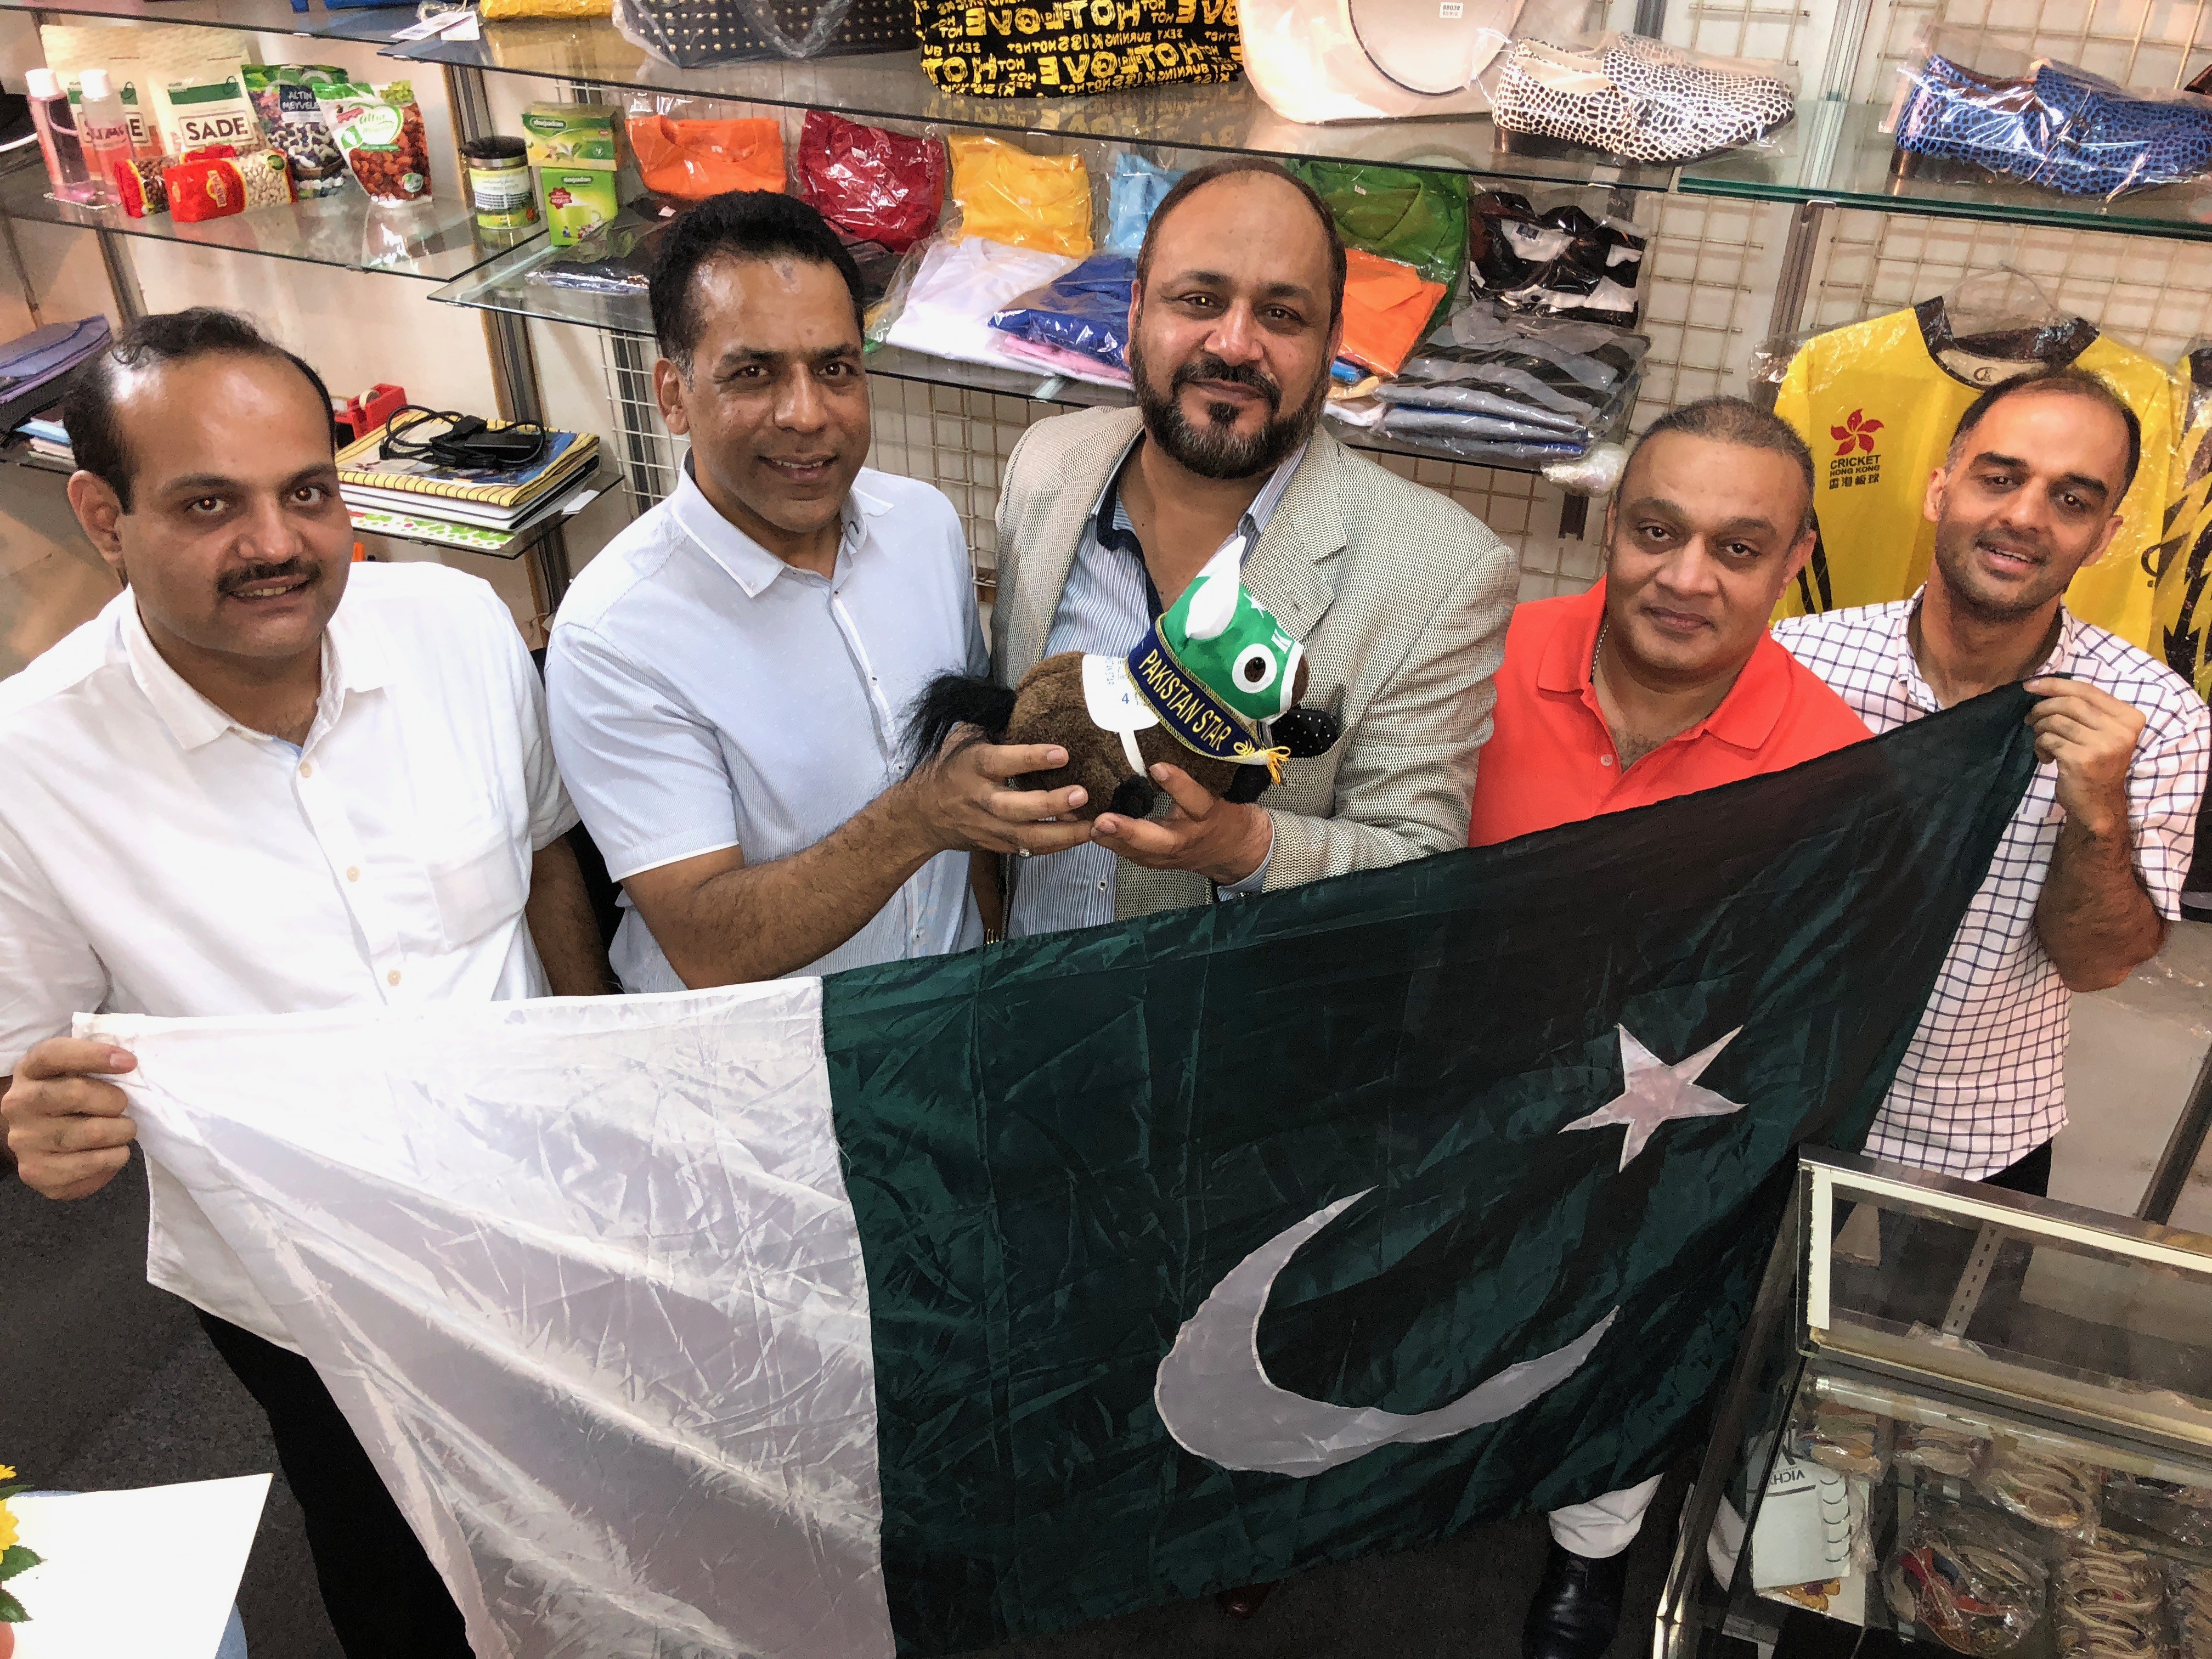 Mohammad Ilyas, Bhatti Saeed, Jawad Ashraf, Mian Rasheed and Shahid Mubeen with a Pakistan Star plushie. Photo: Michael Cox